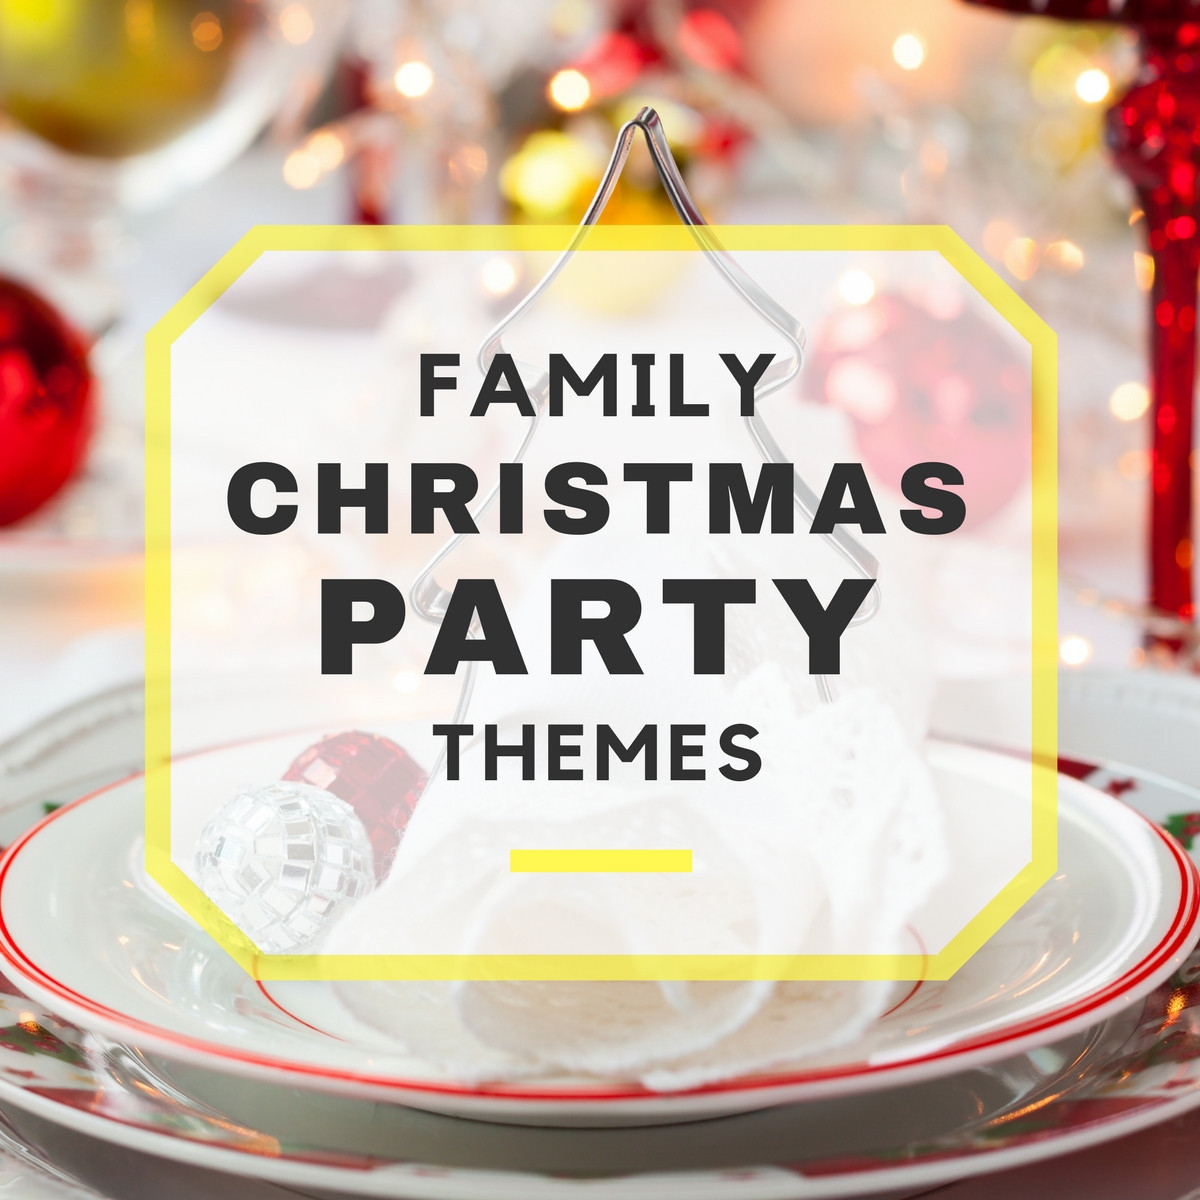 Fun Family Christmas Party Ideas
 Family Christmas Party Themes